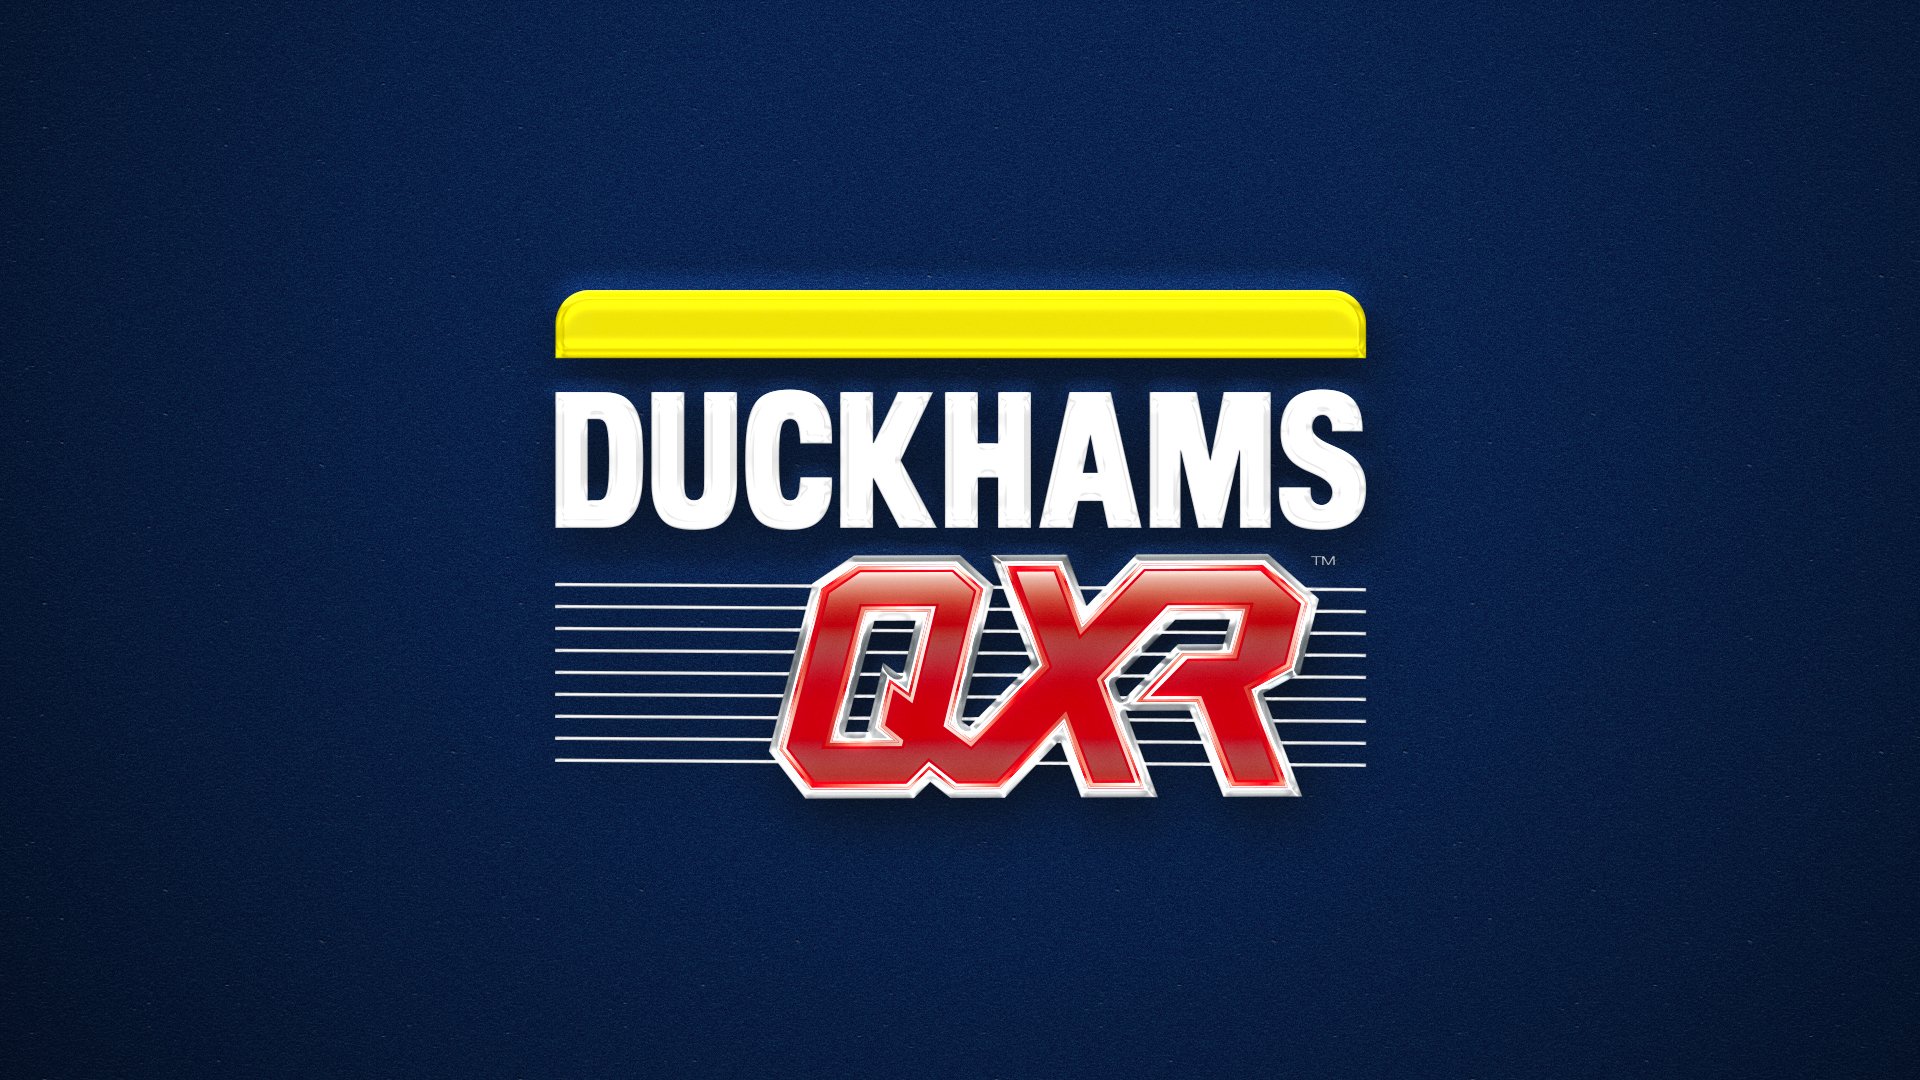 Modern-Duckhams-QXR.jpg